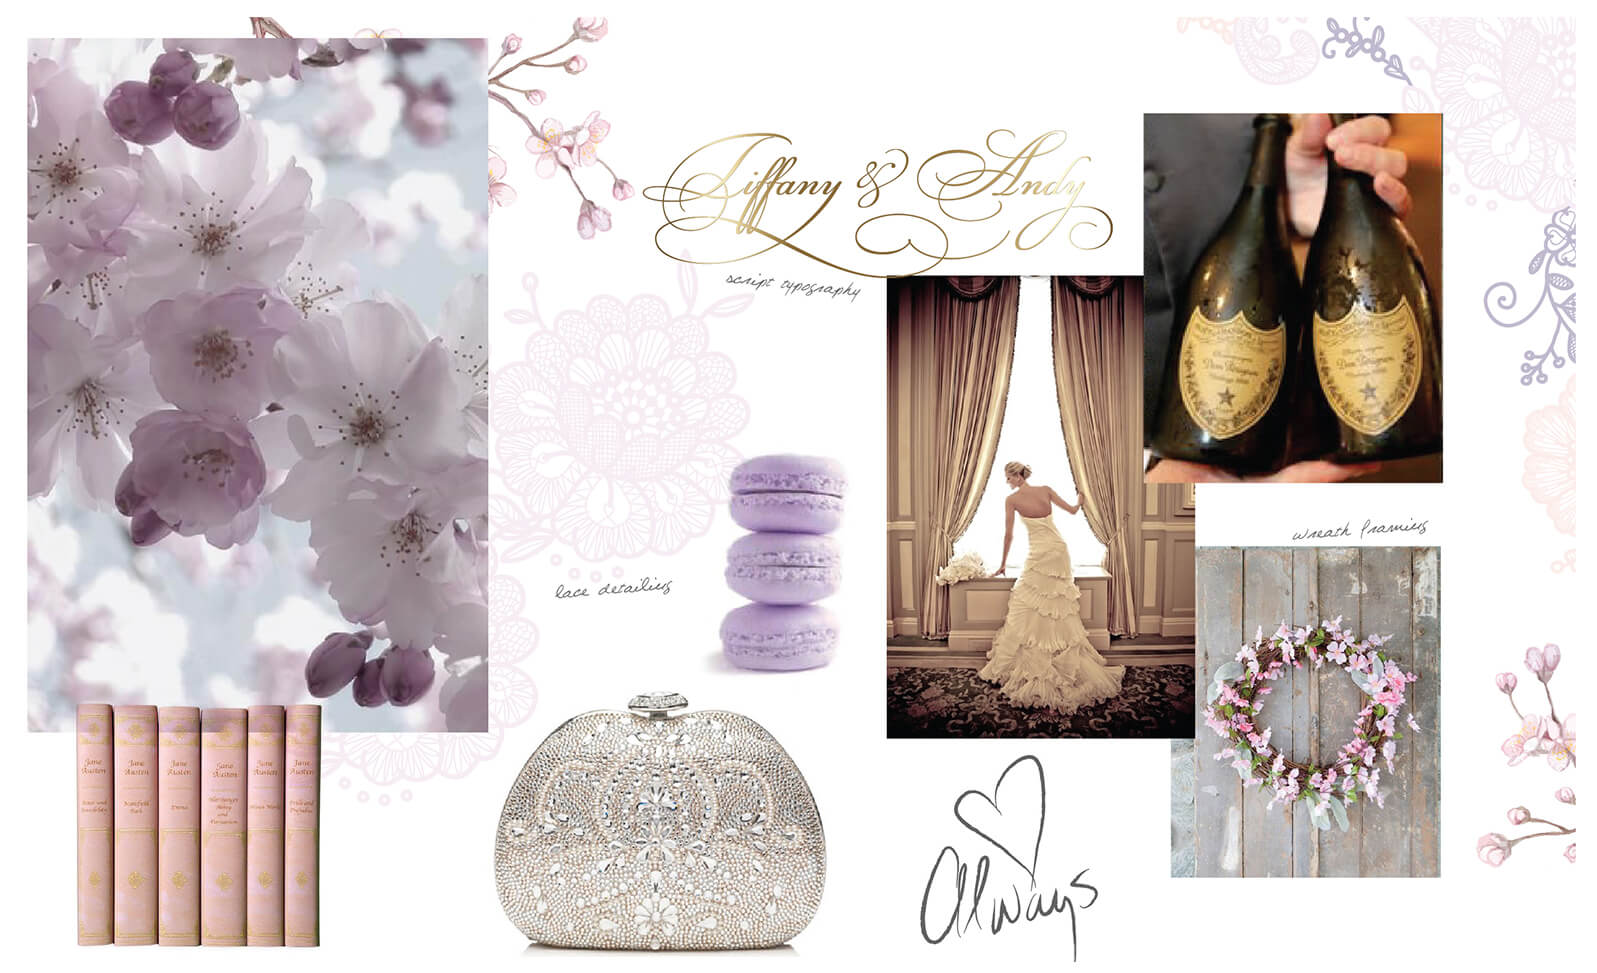 Delicate romantic details and plum blossom florals